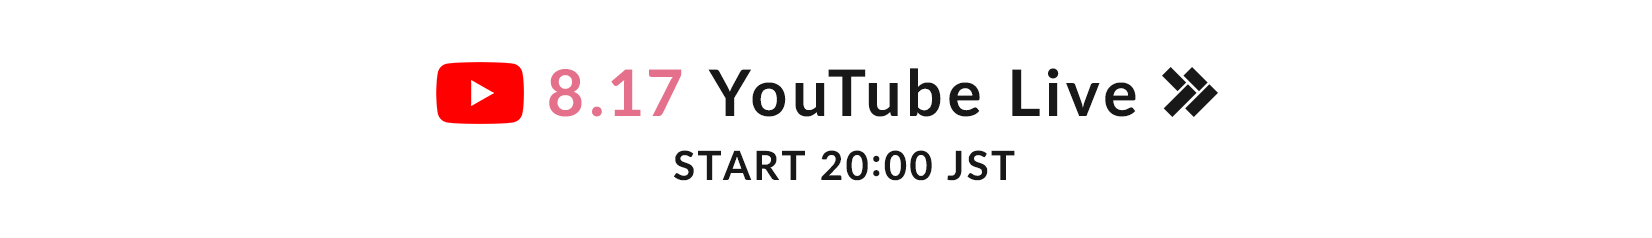 8.17 YouTube Live START 20:00 JST